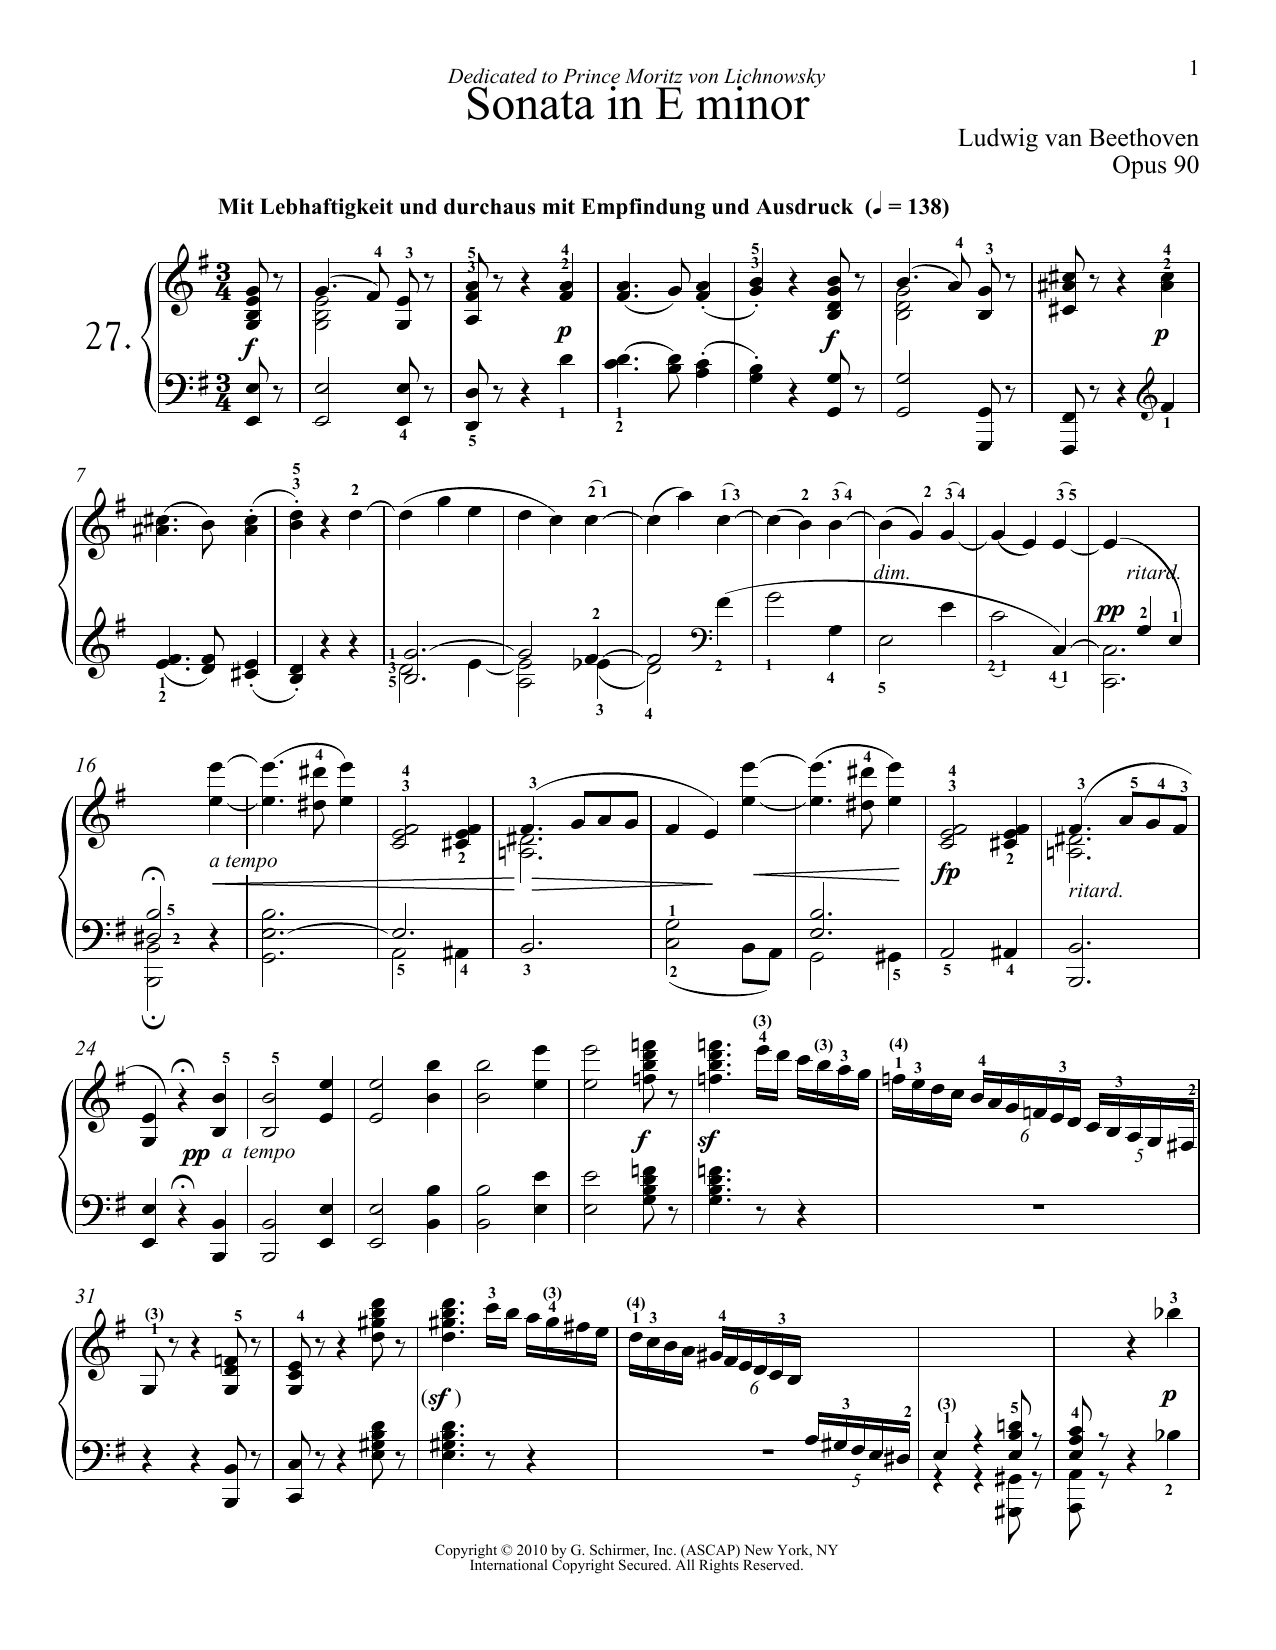 Ludwig van Beethoven Piano Sonata No. 27 In E Minor, Op. 90 Sheet Music Notes & Chords for Piano - Download or Print PDF